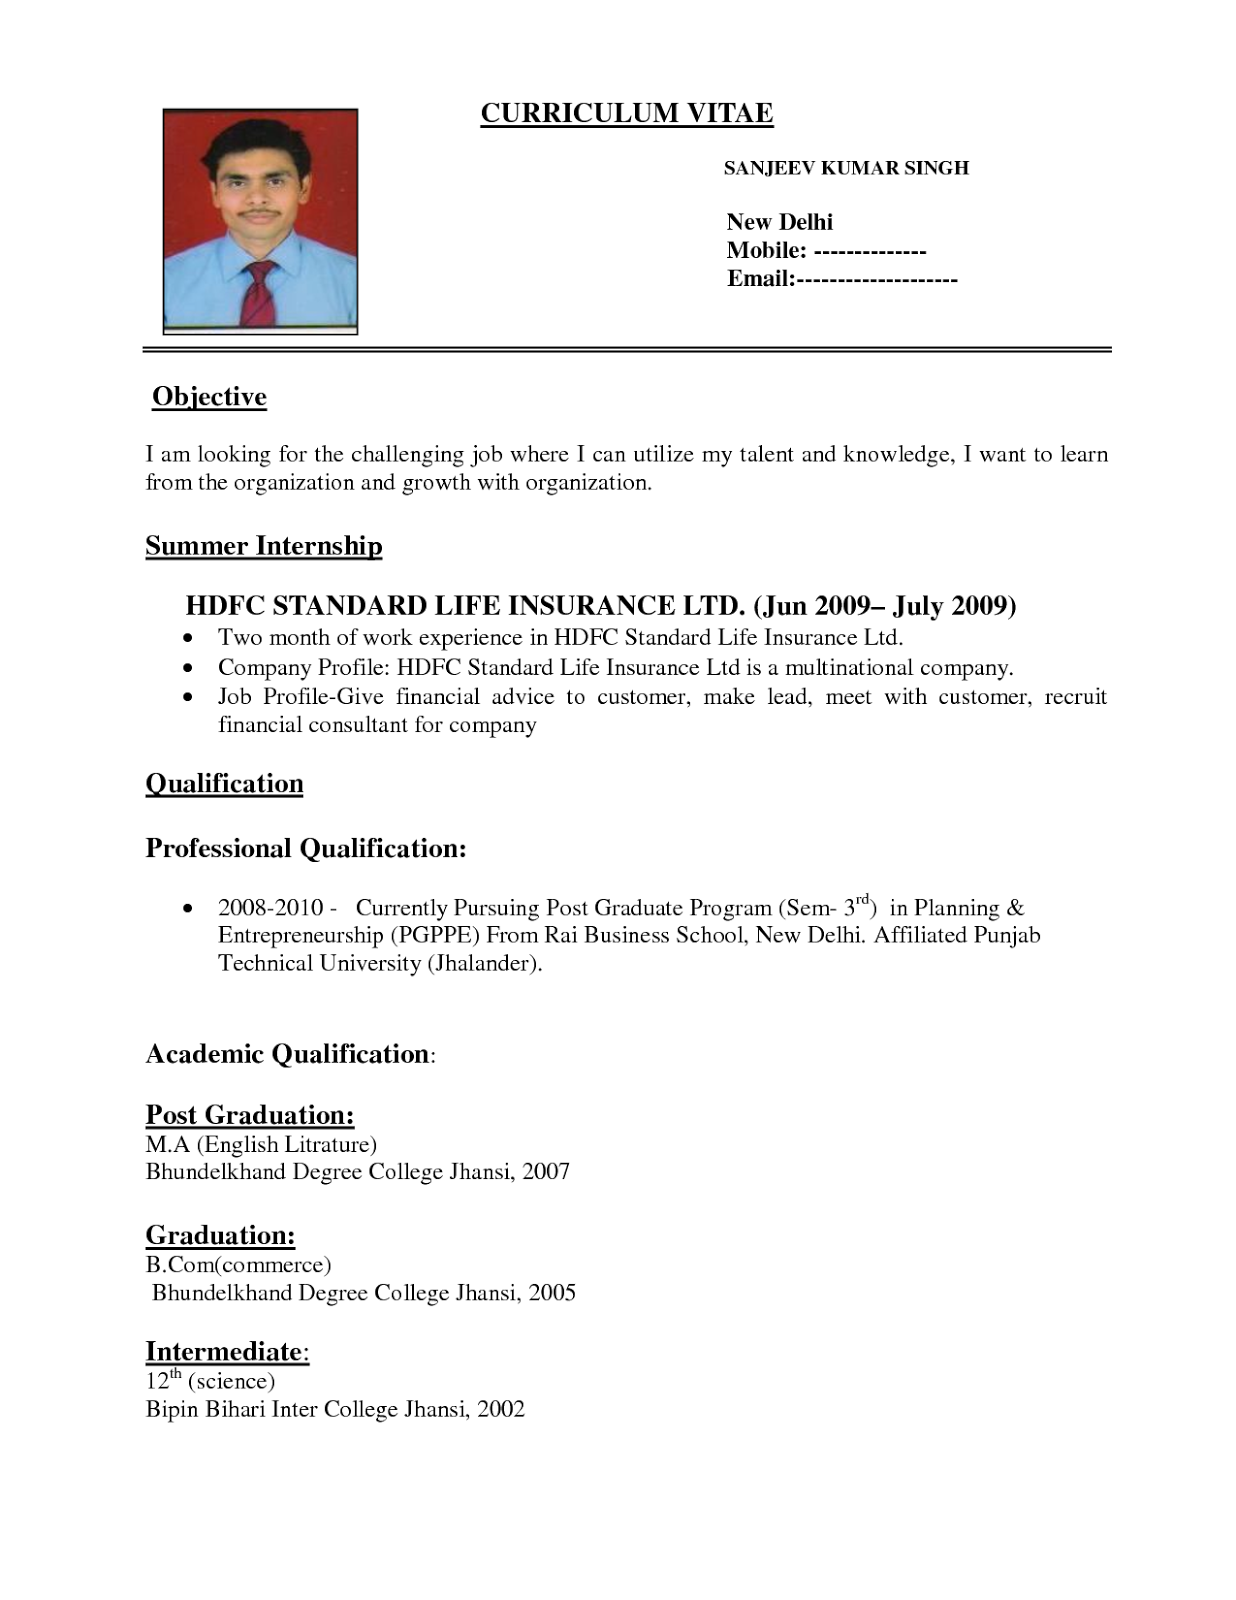 Sample formal resume template